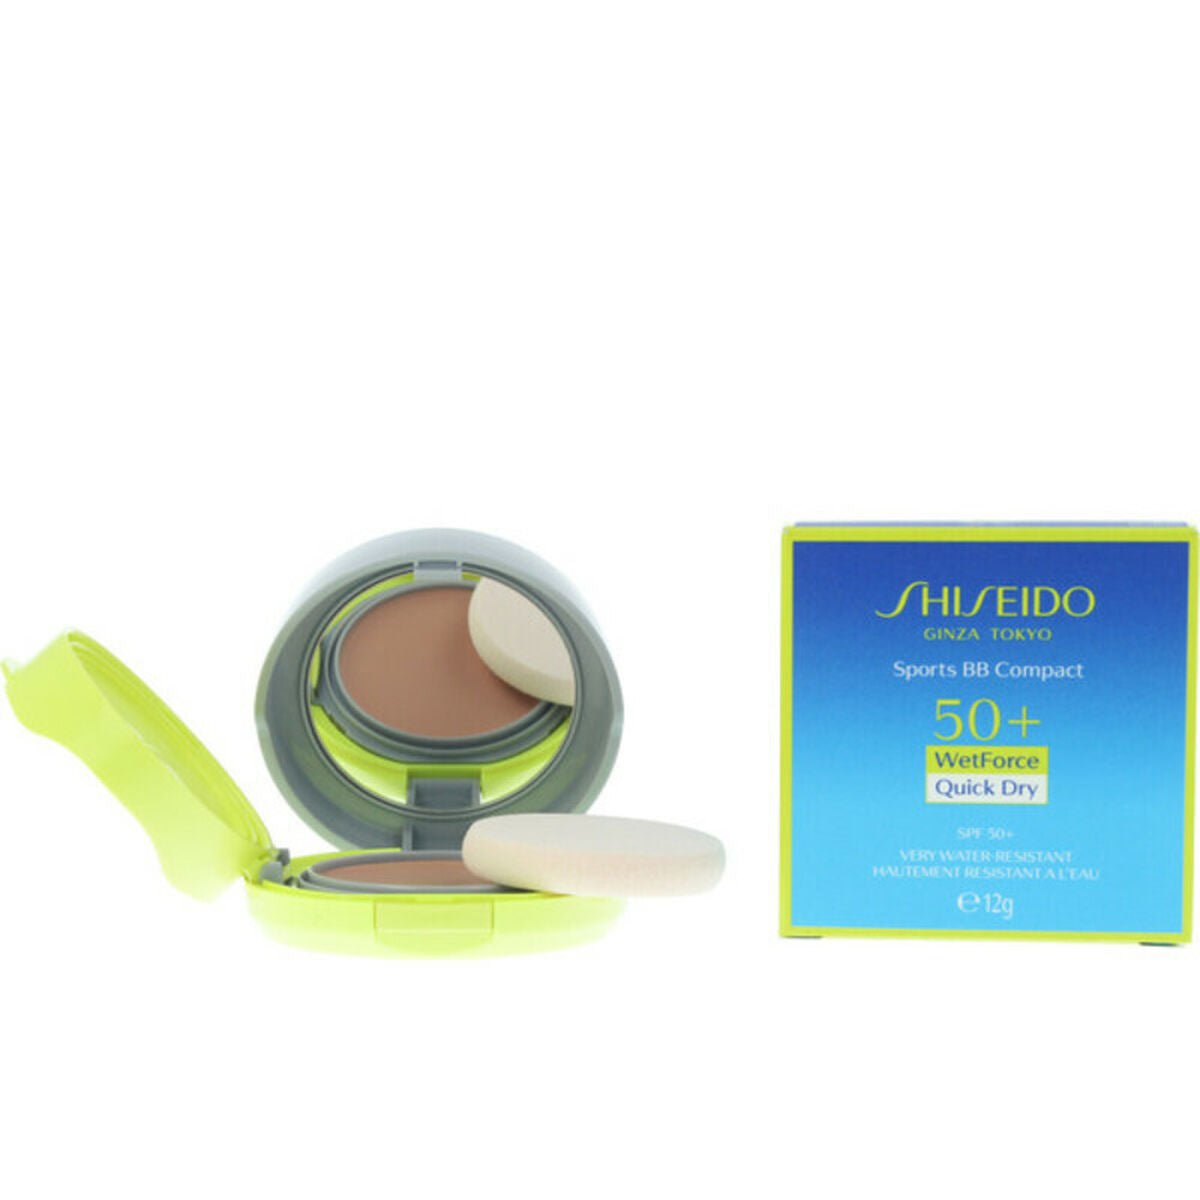 Make-up Effect Hydrating Cream Sun Care Sports BB Compact Shiseido SPF50+ Spf 50 12 g - JOSEPH BEAUTY